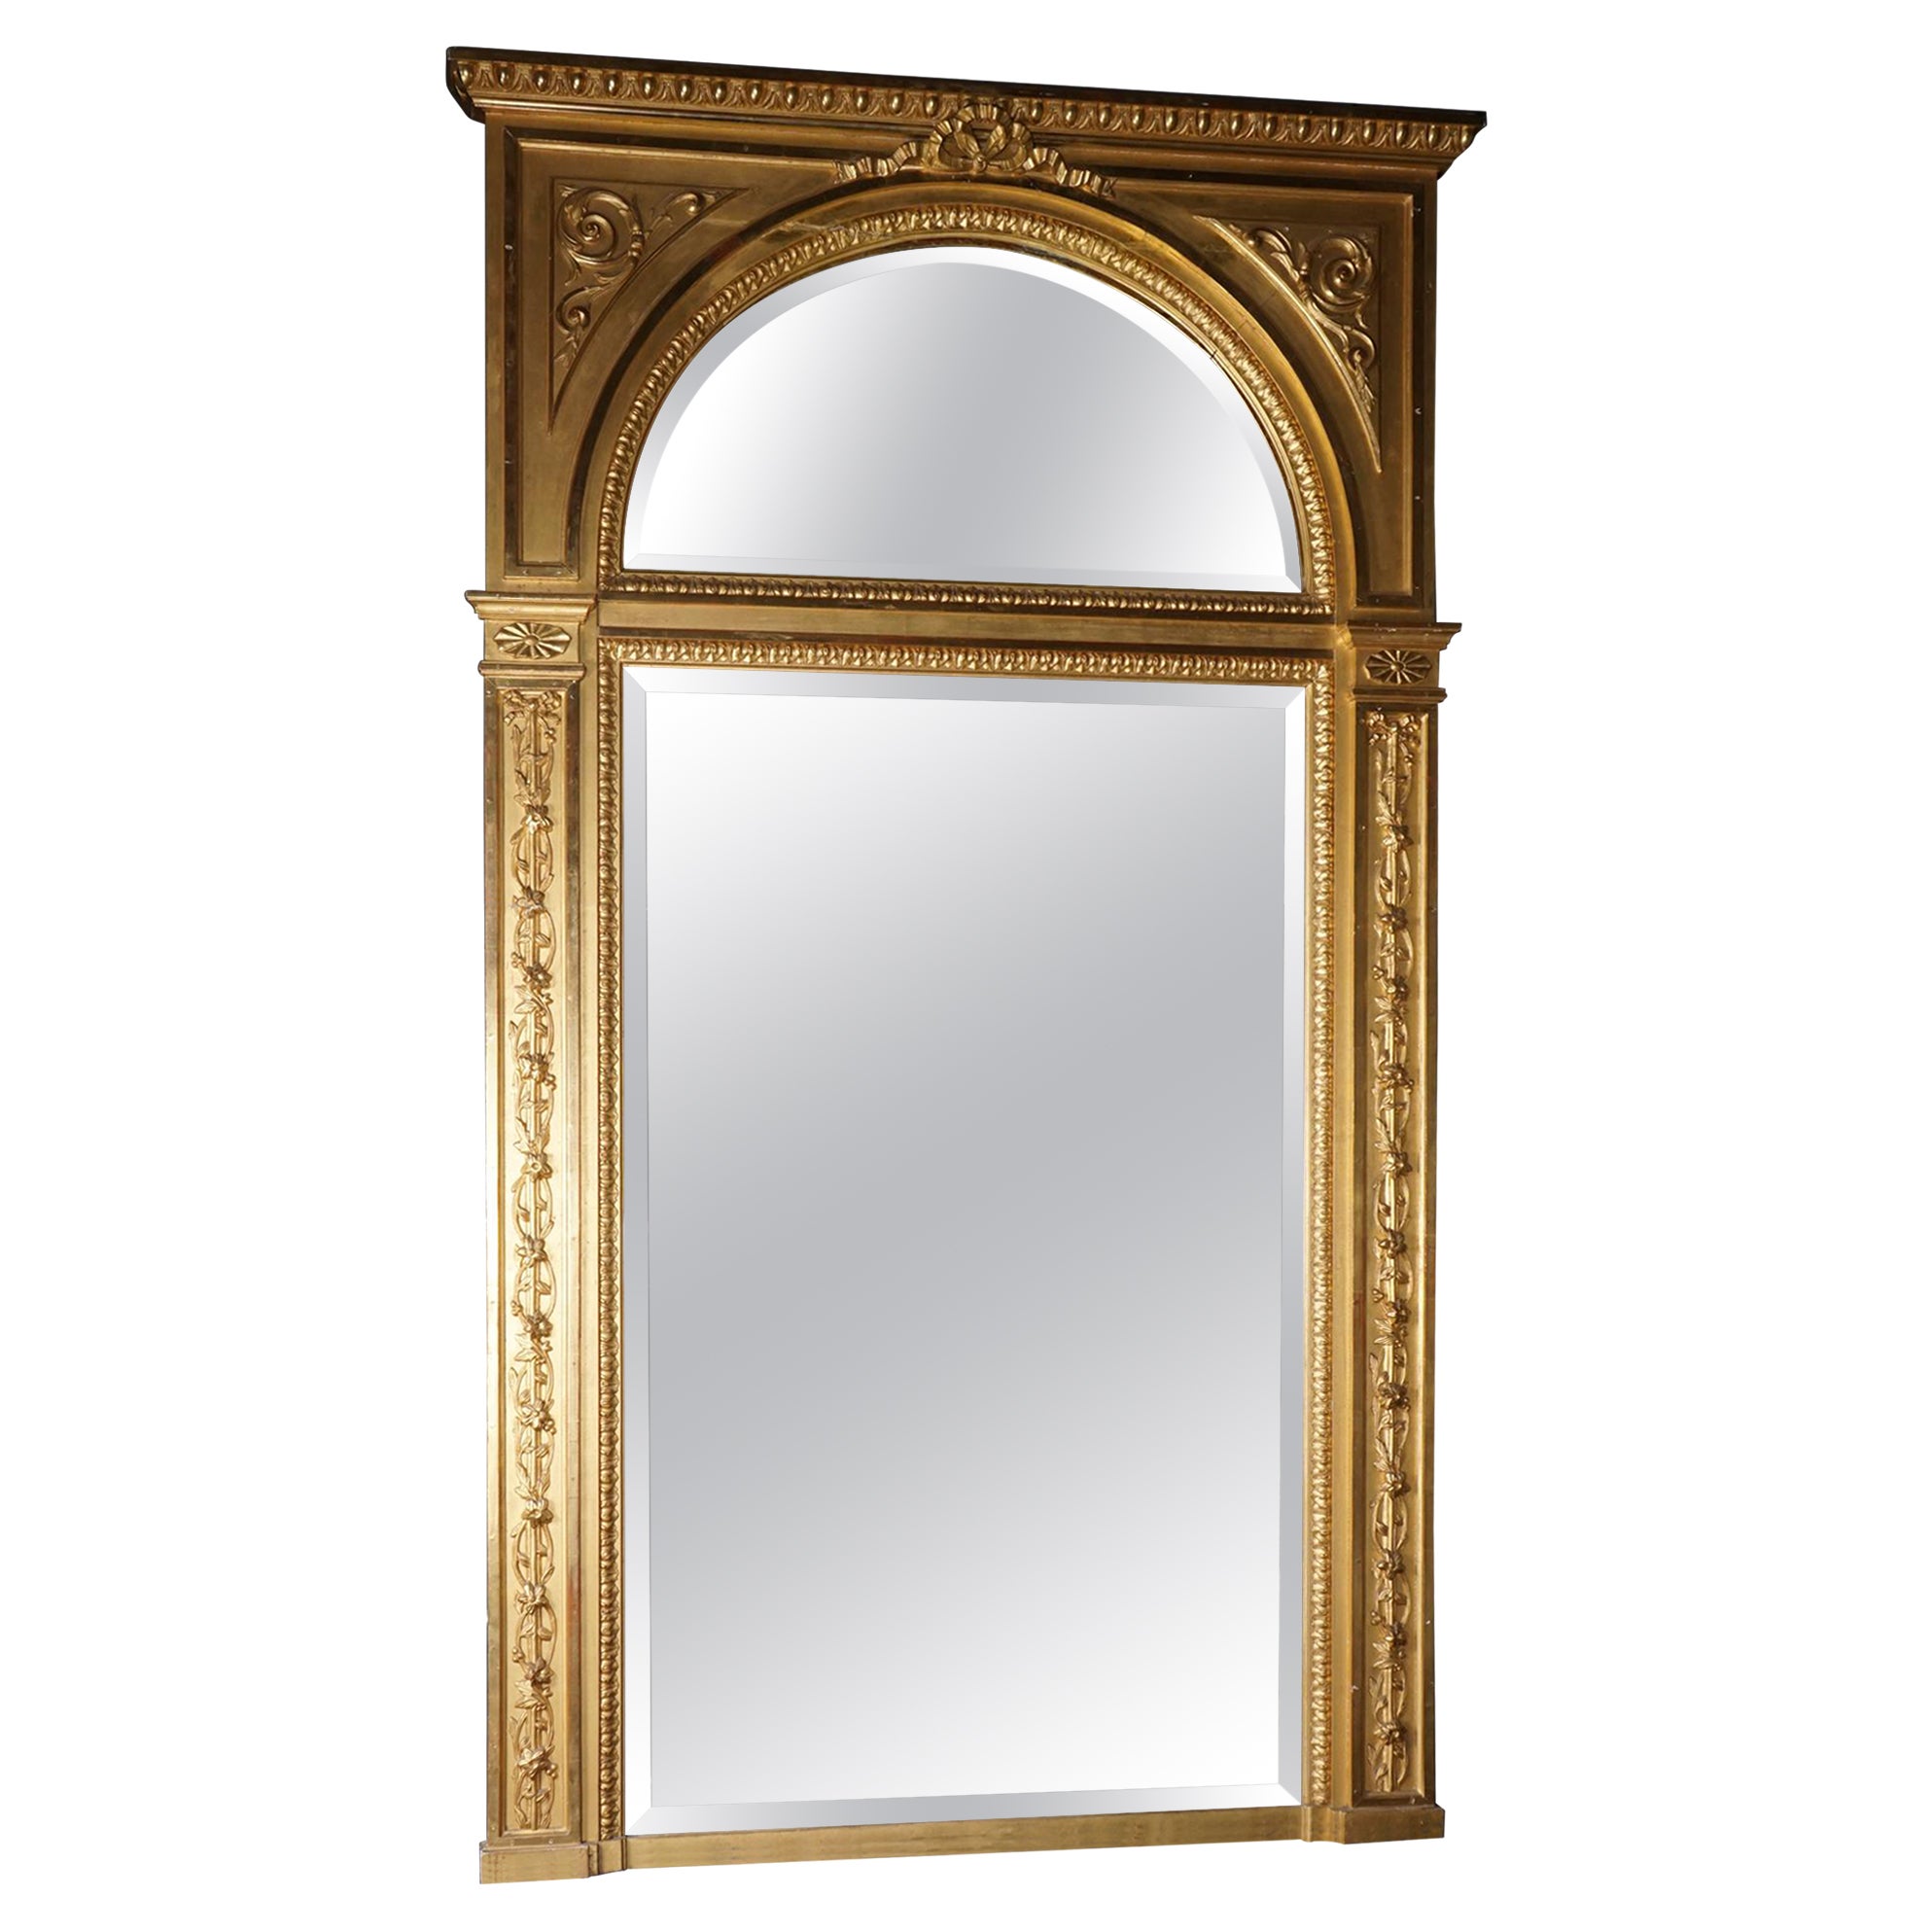 Fine Water Gilt Mirror in the Louis XVI Style